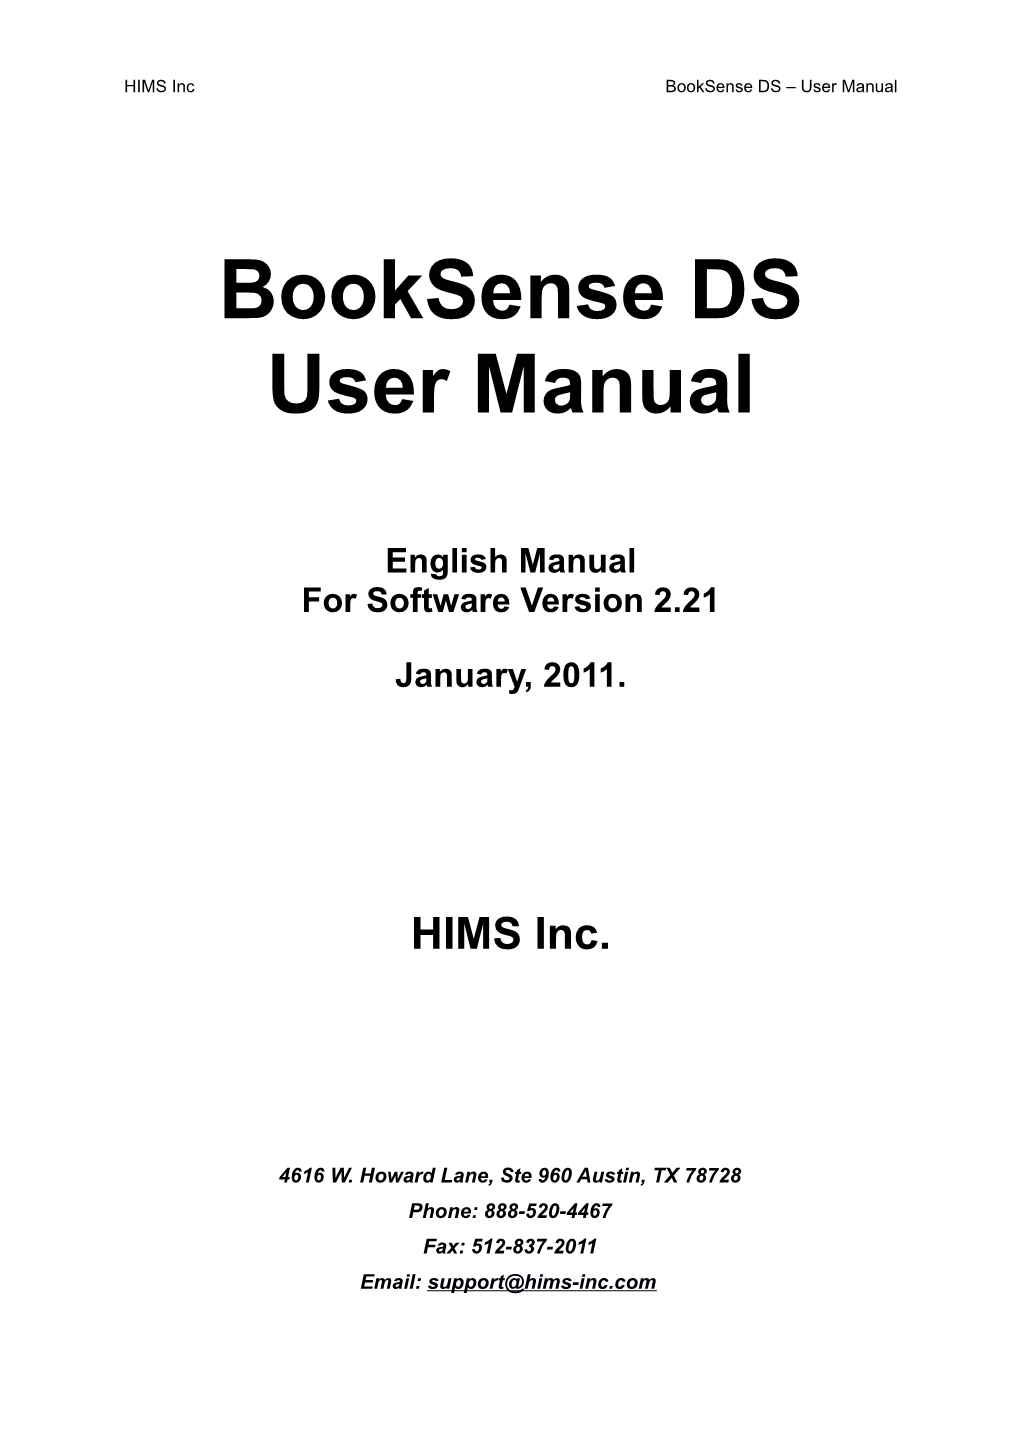 HIMS Inc Booksense DS User Manual